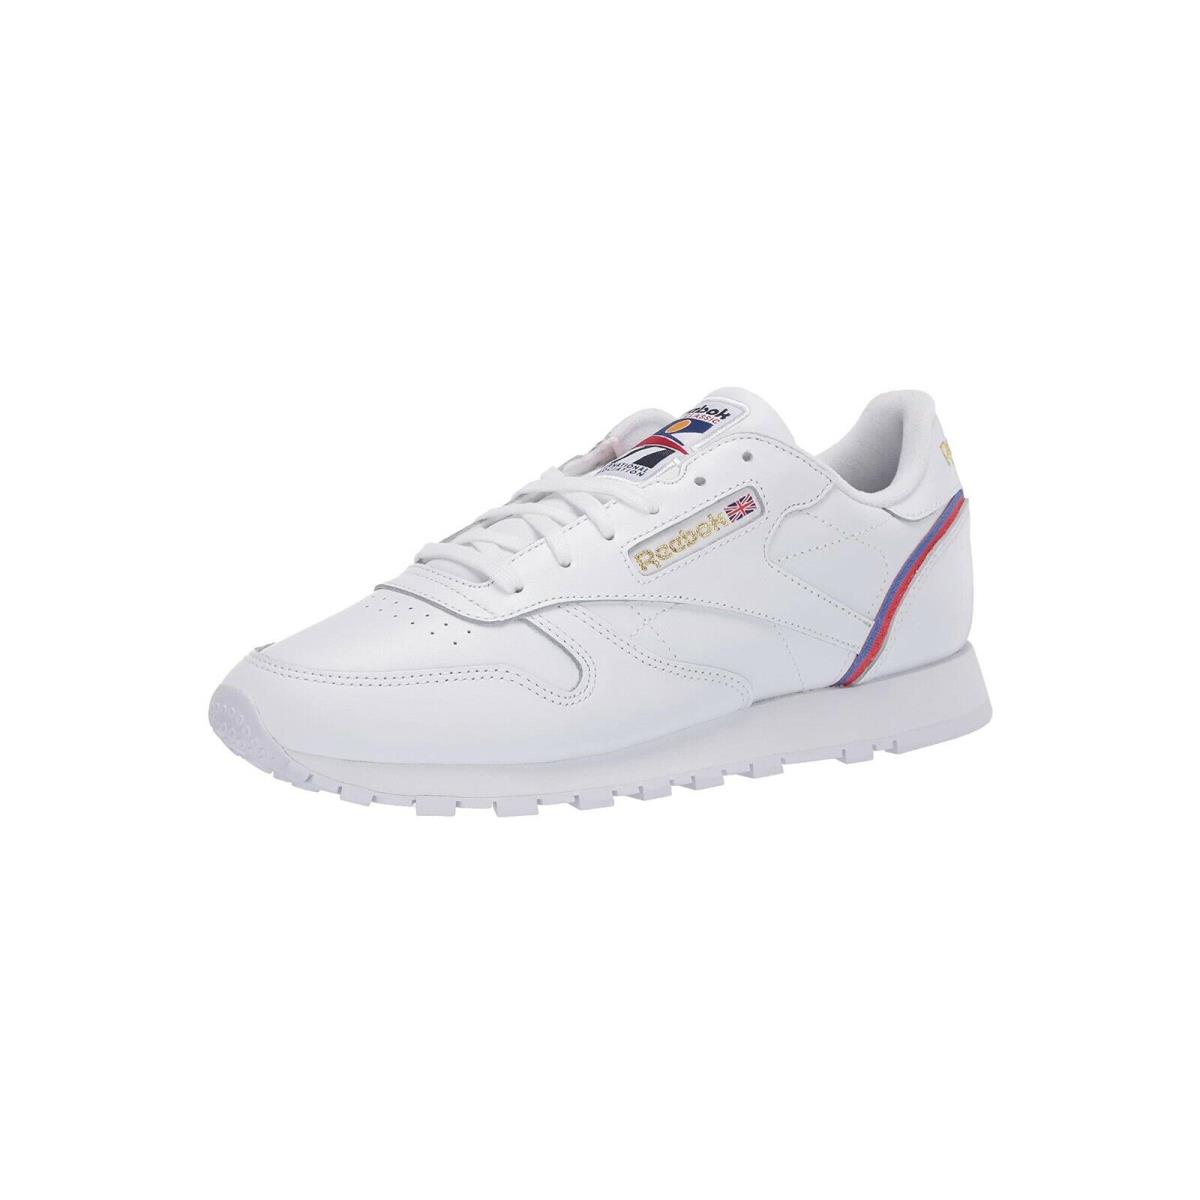 Reebok Classic Leather White Metallic Gold Sneakers Women Girls Running Shoes - White